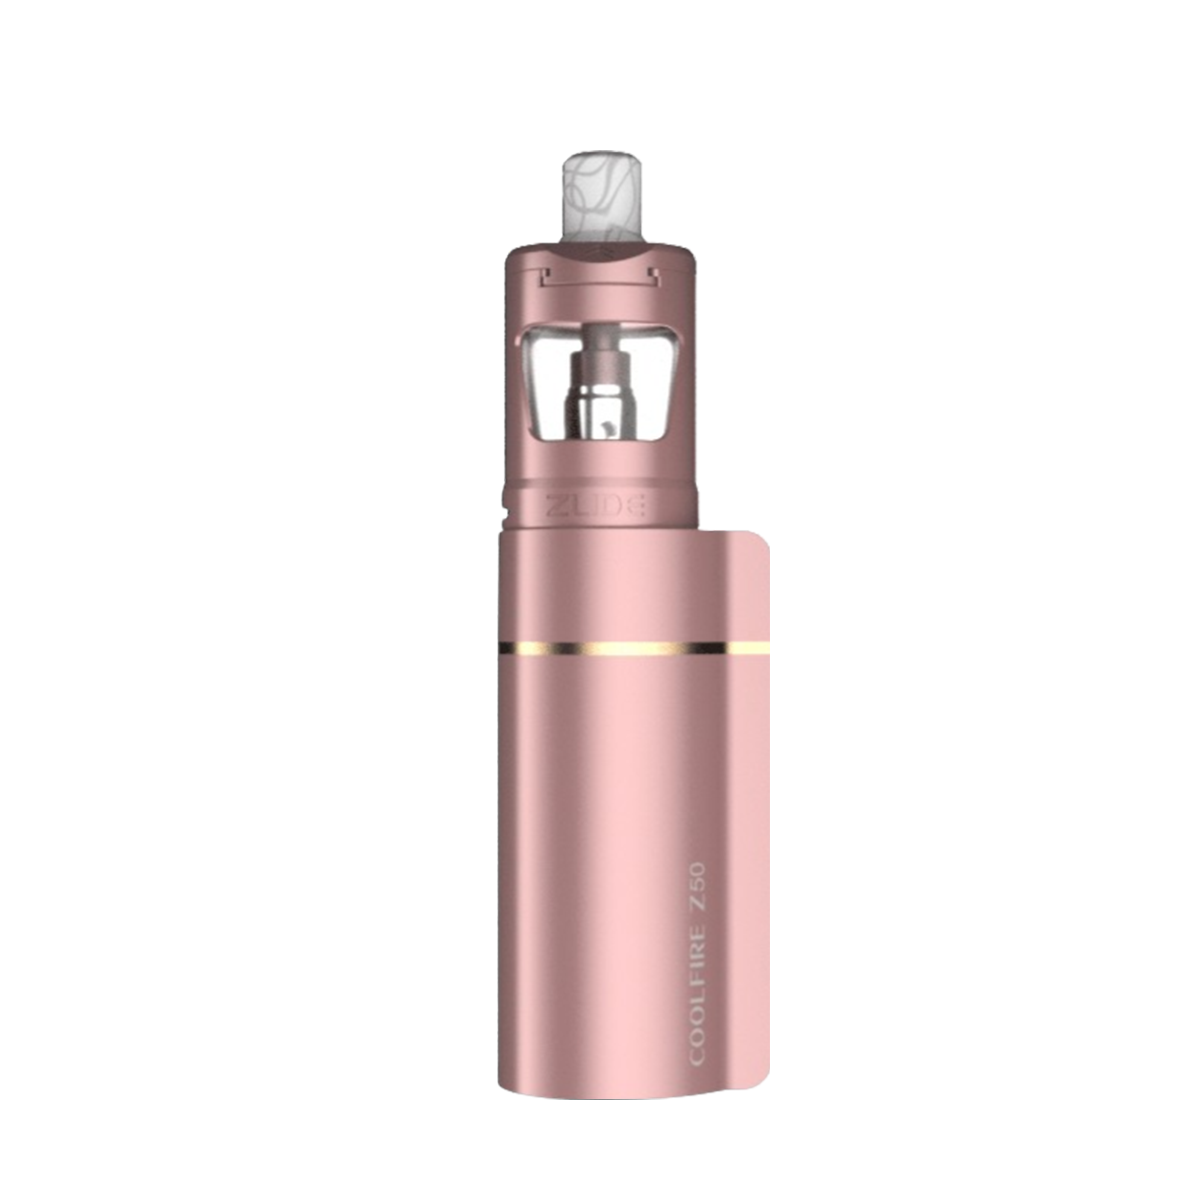 Innokin Coolfire Z50 Advanced Mod Kit Coral Pink  